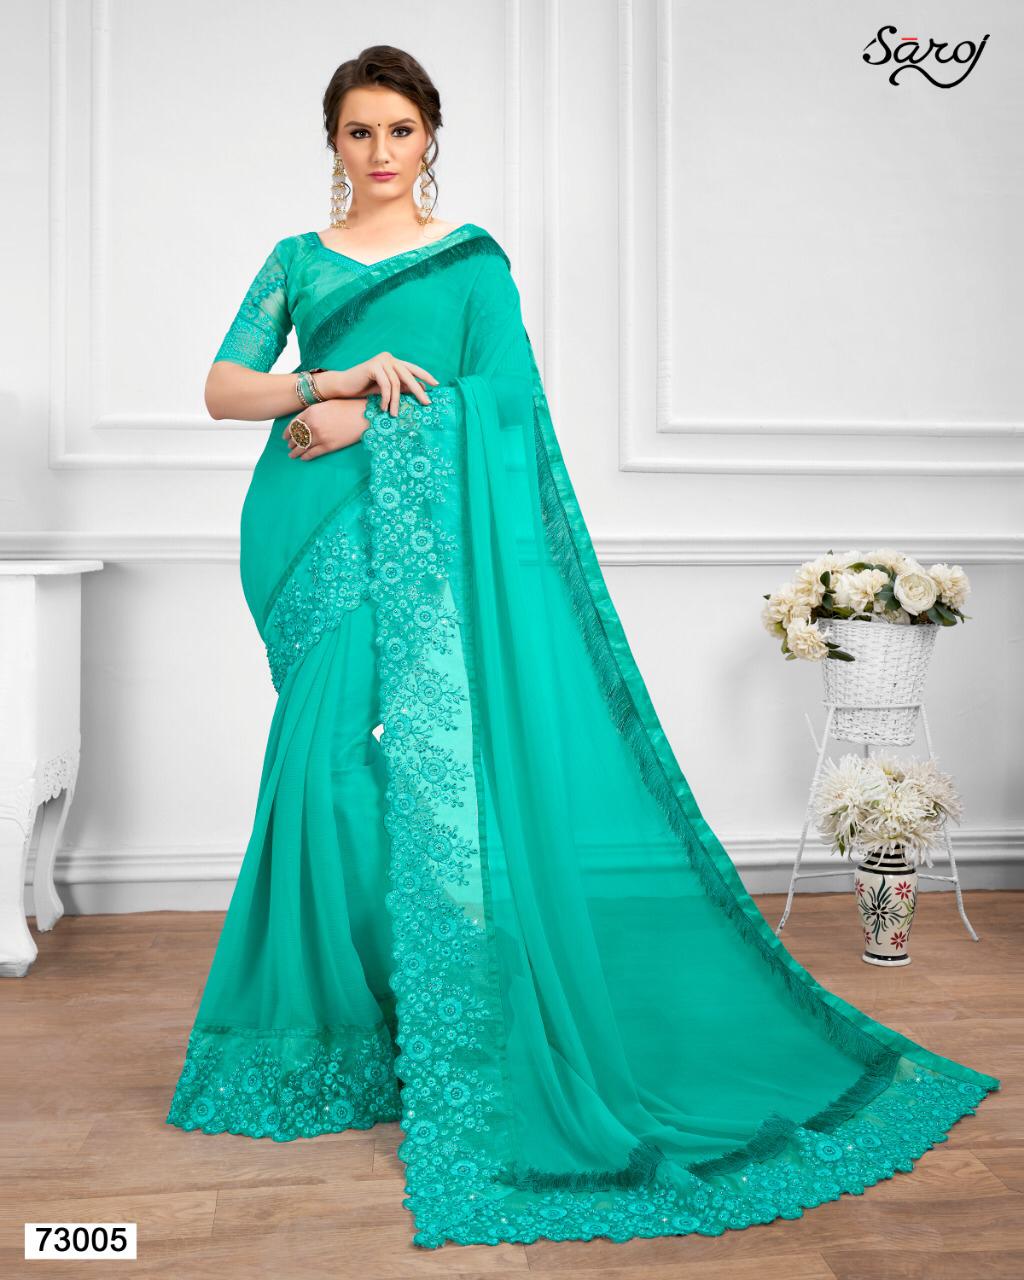 Saroj gazal beautifully designed attractive look Sarees